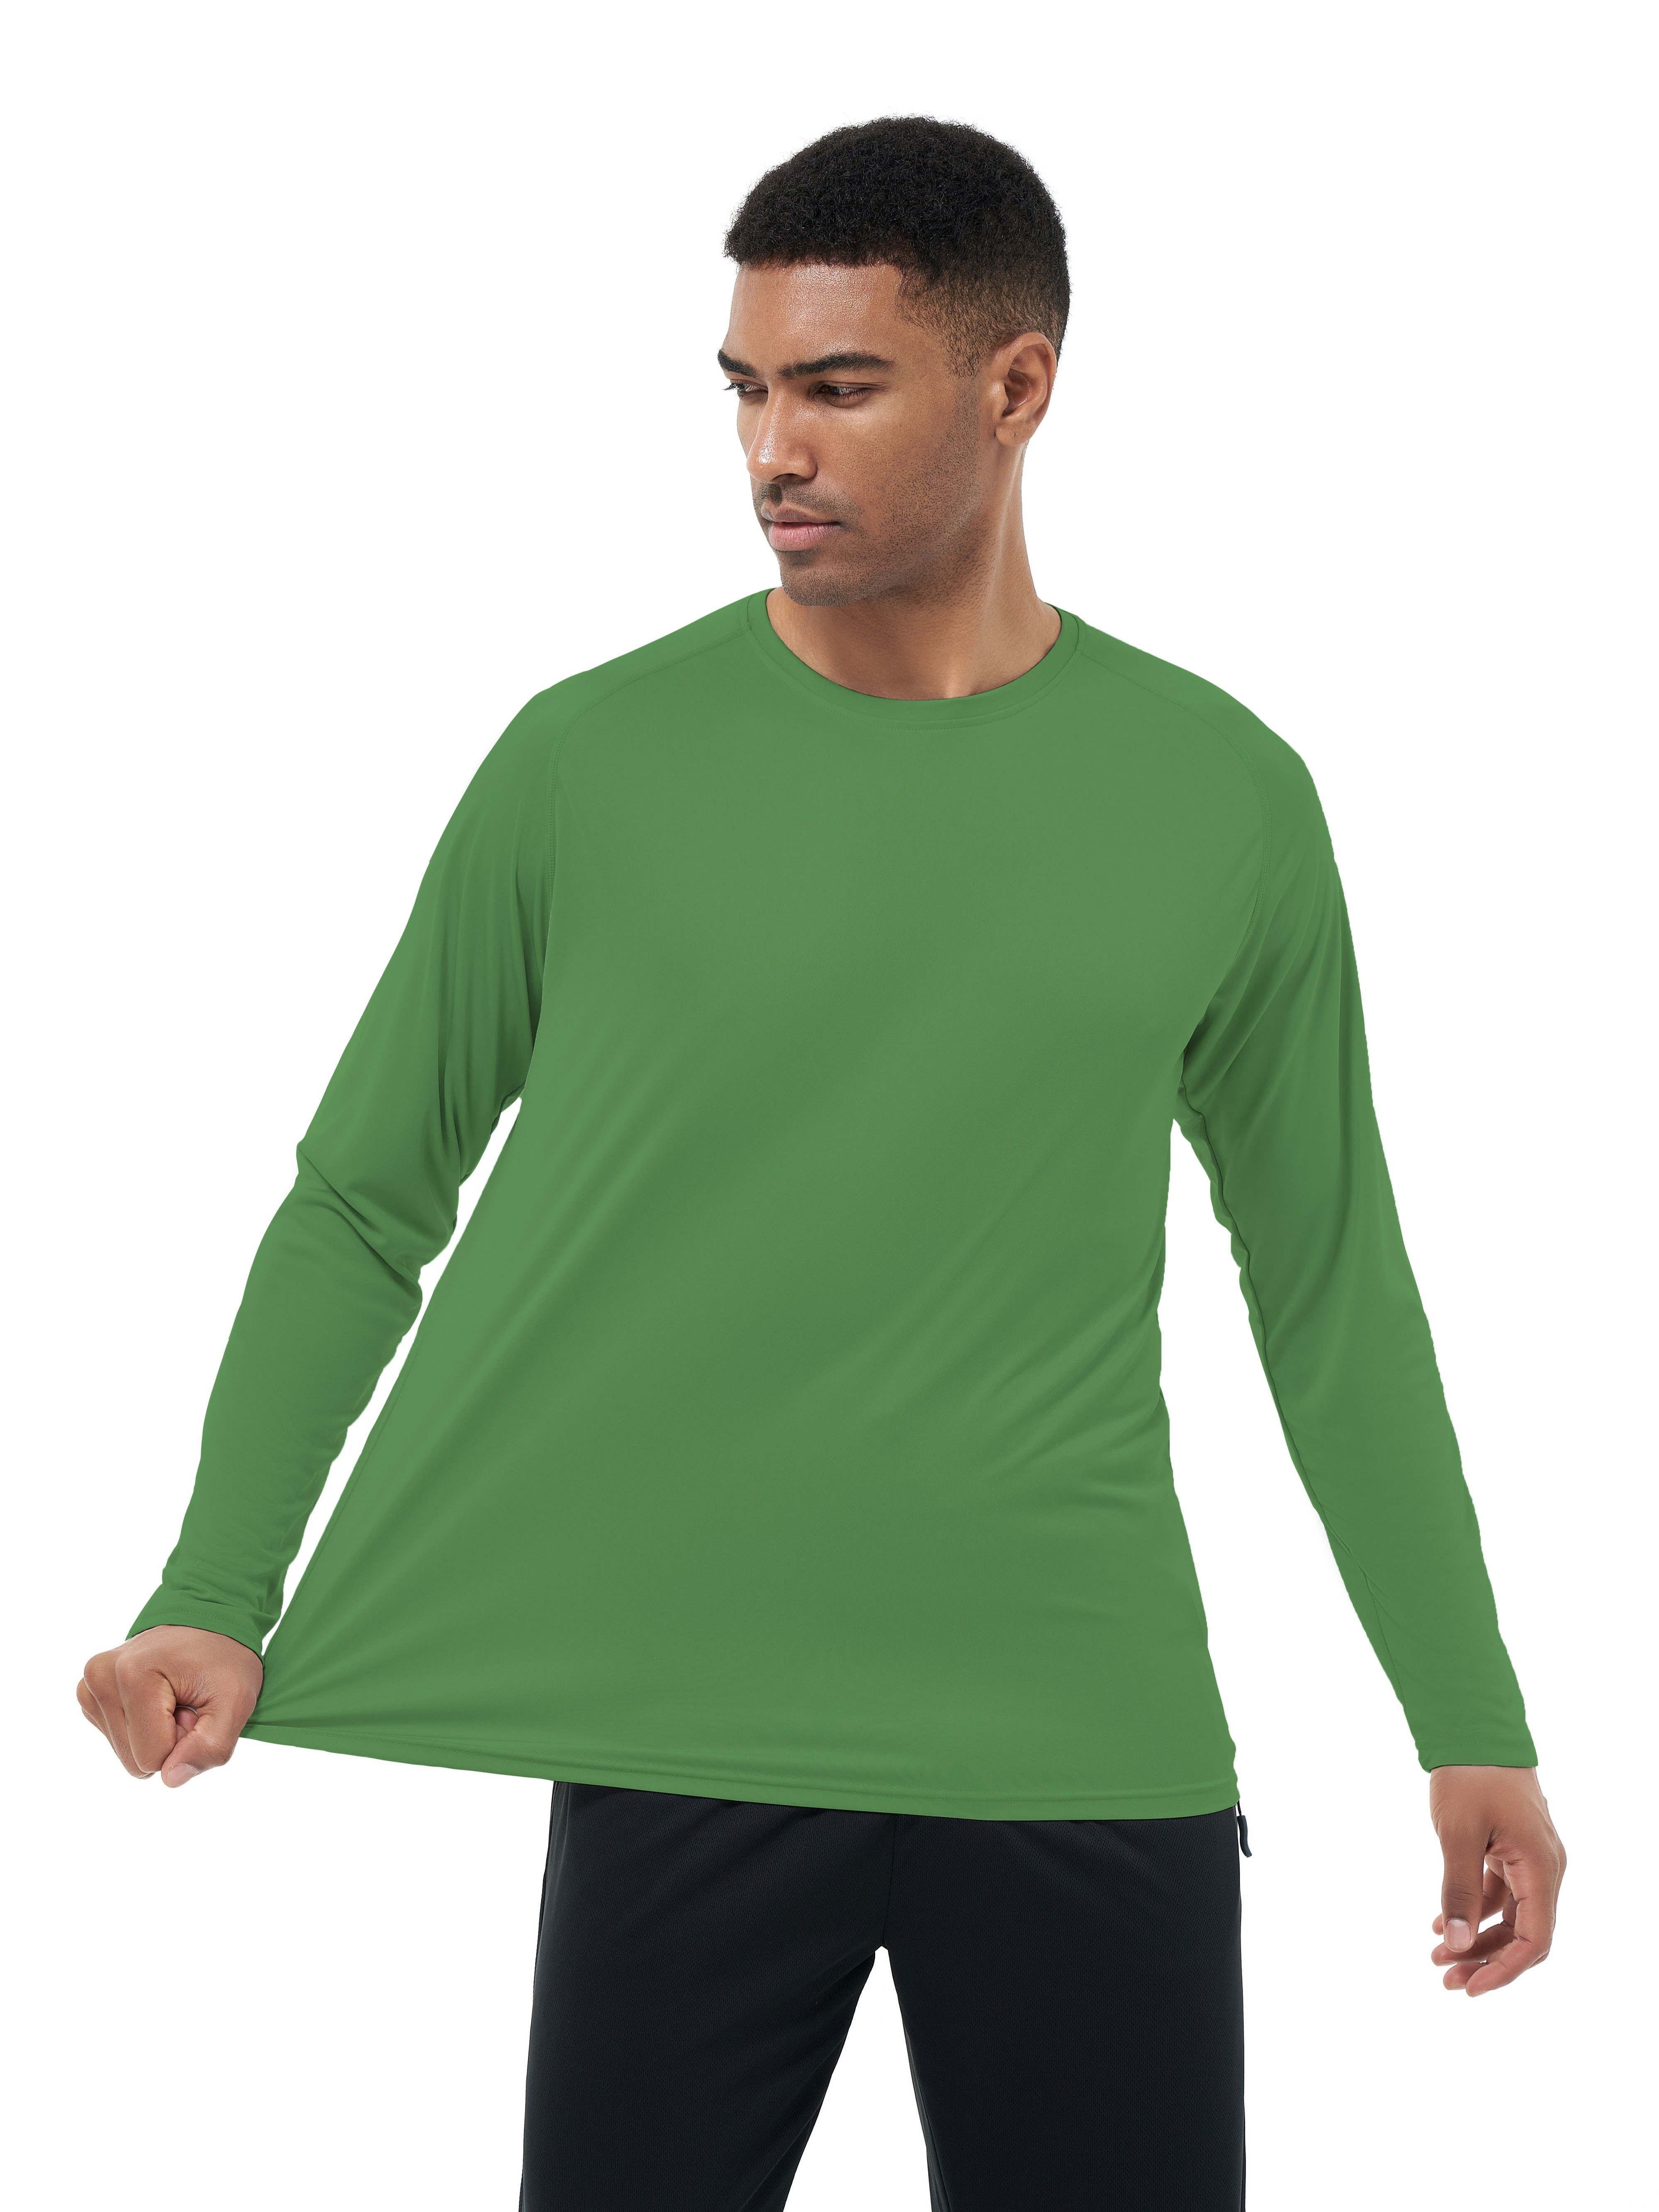 Camisa-manga-larga-color-verde  Camisas manga larga hombre, Ropa casual  hombres, Camisas hombre